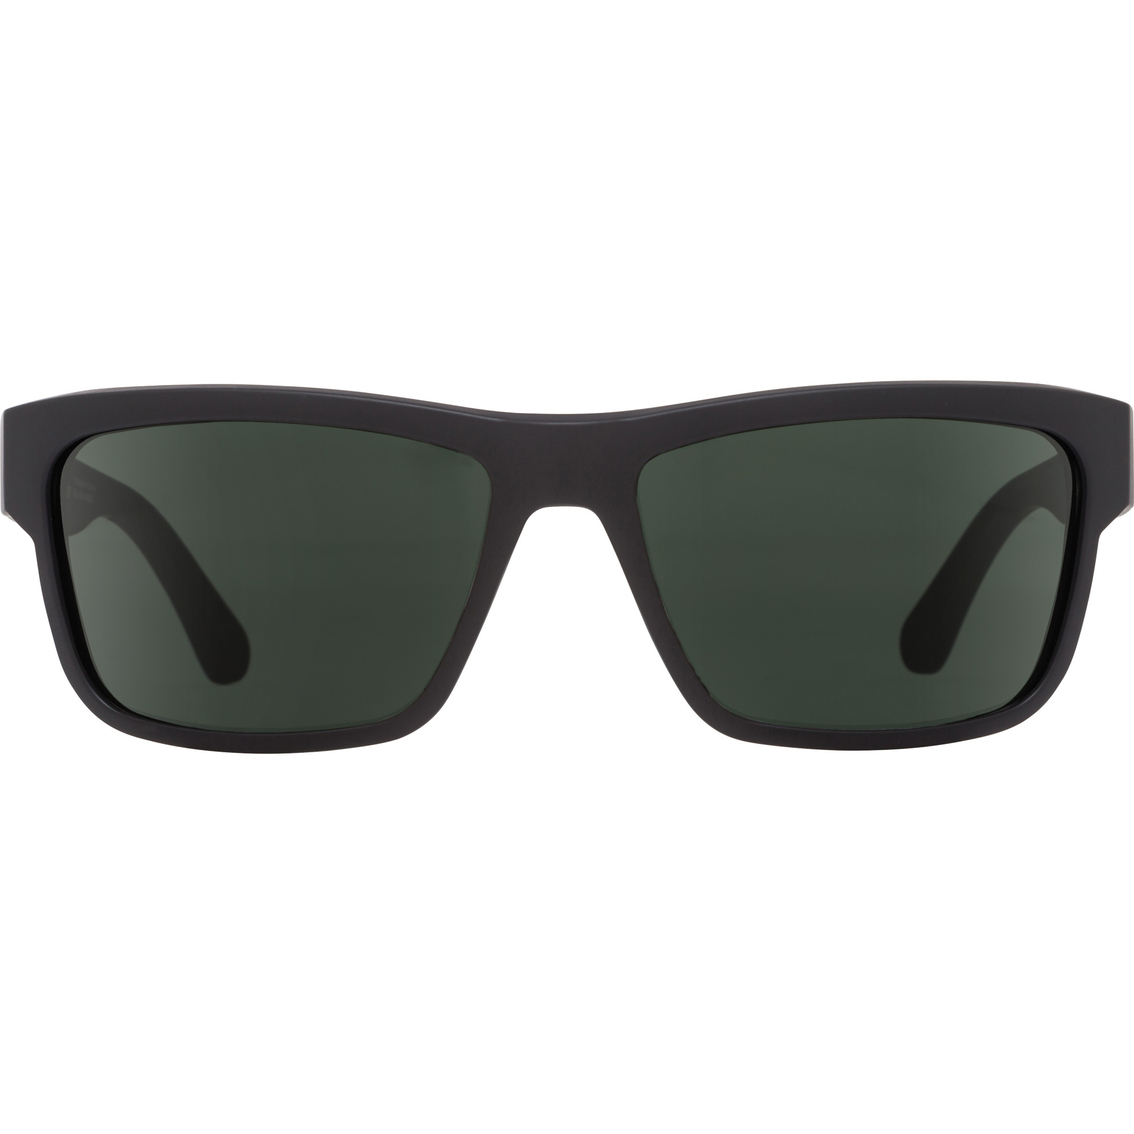 Spy Optic Frazier SOSI Matte Black Happy Sunglasses 6800000000040 - Image 2 of 5